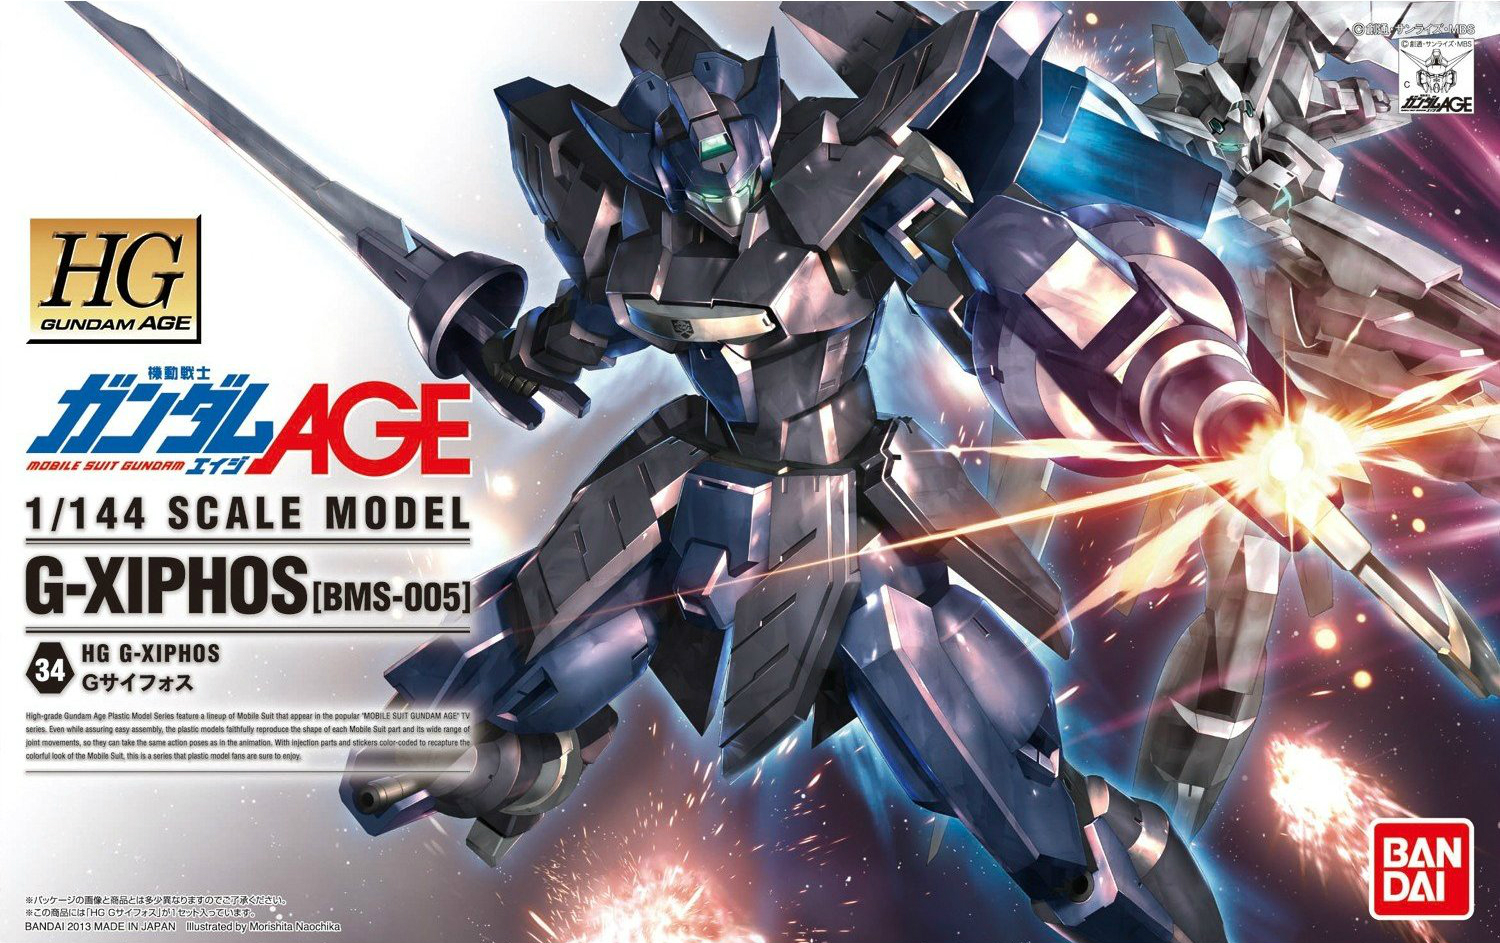 Gundam Age High Grade (HG): #34 G-Xiphos 